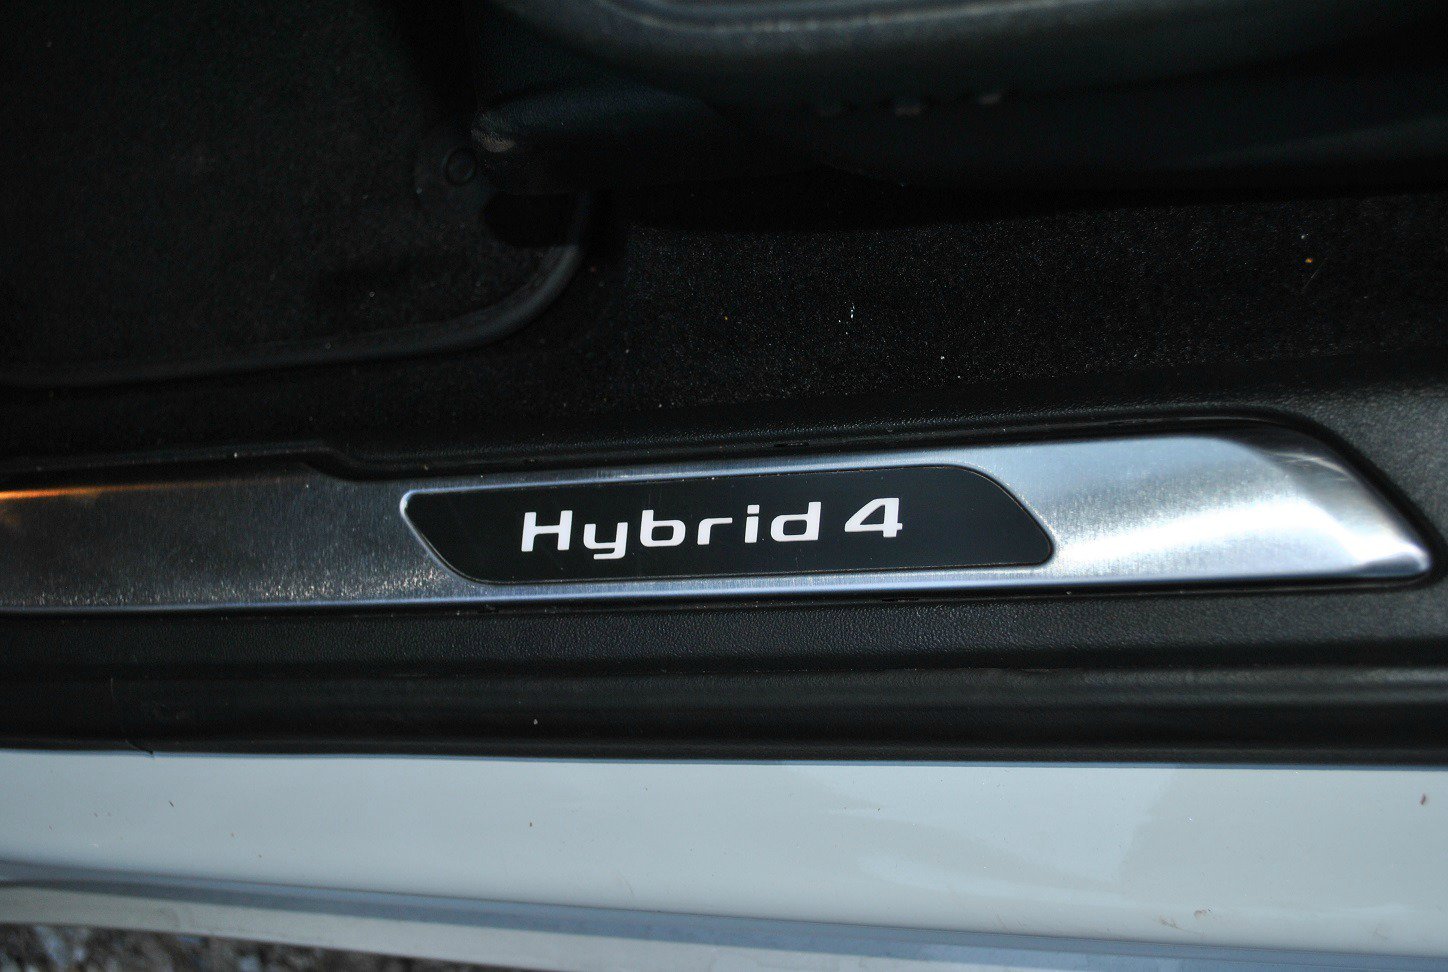 DS 5 Hybrid 4x4 (2015)